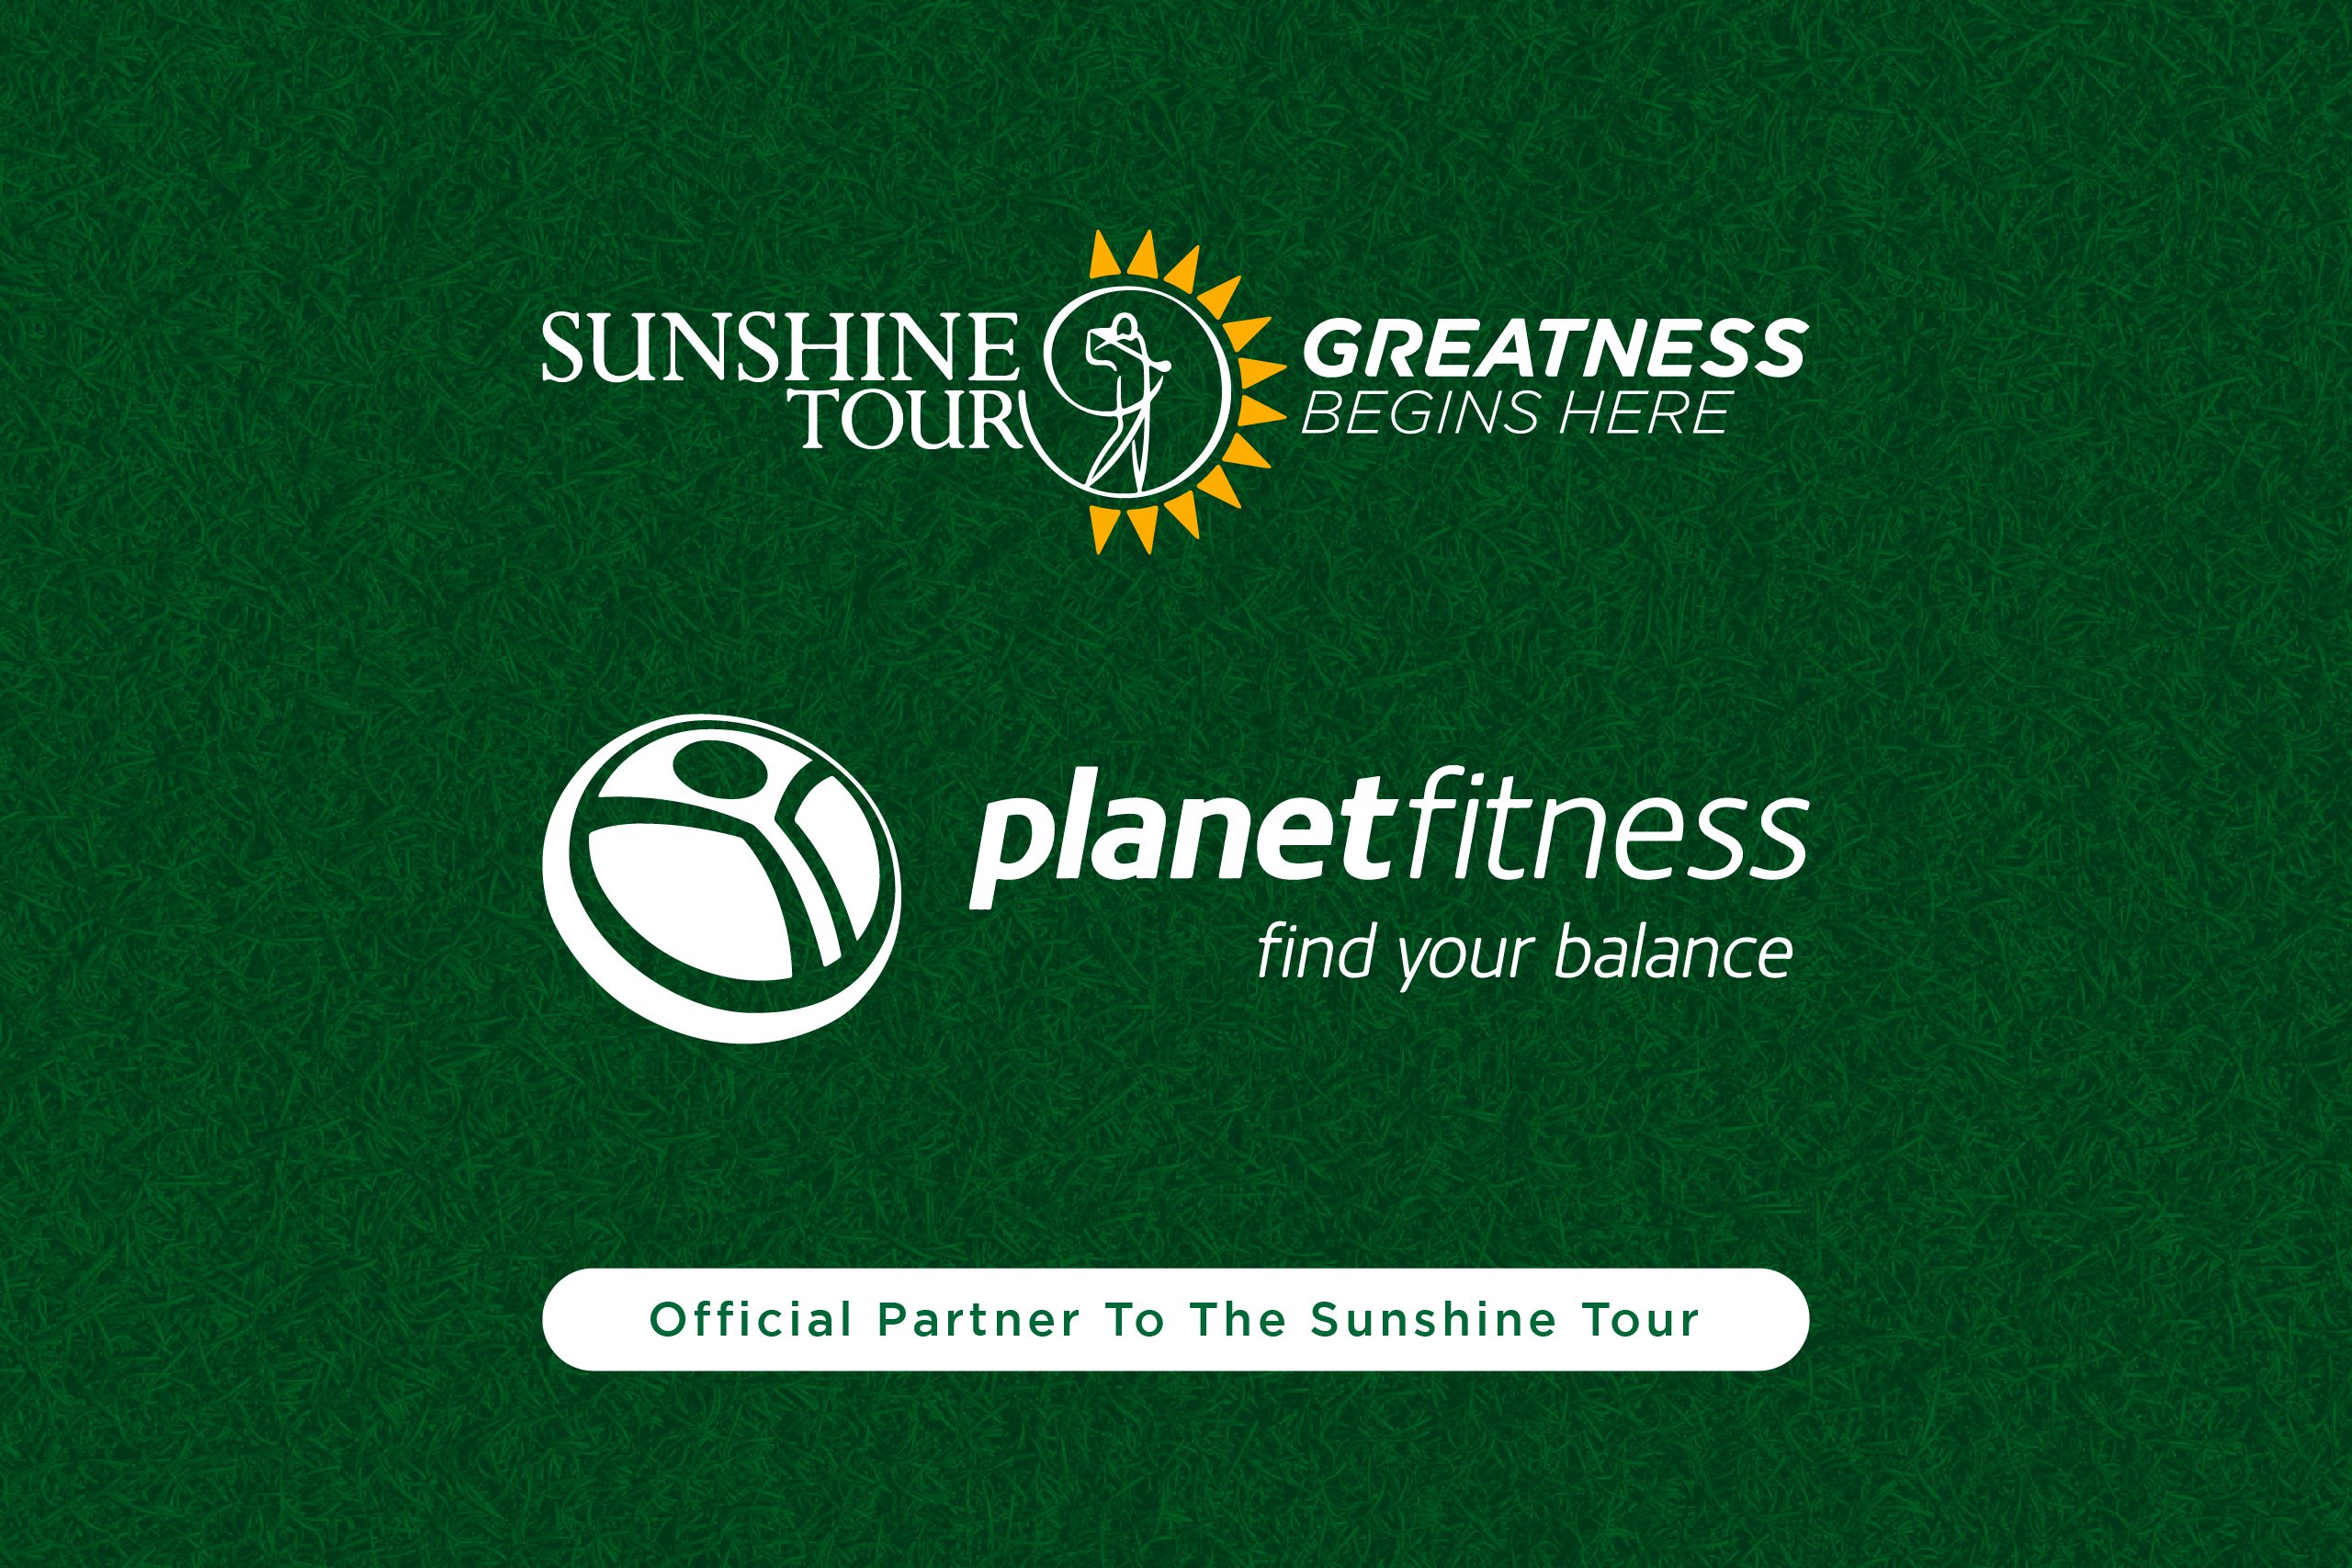 Sunshine Fitness Logo